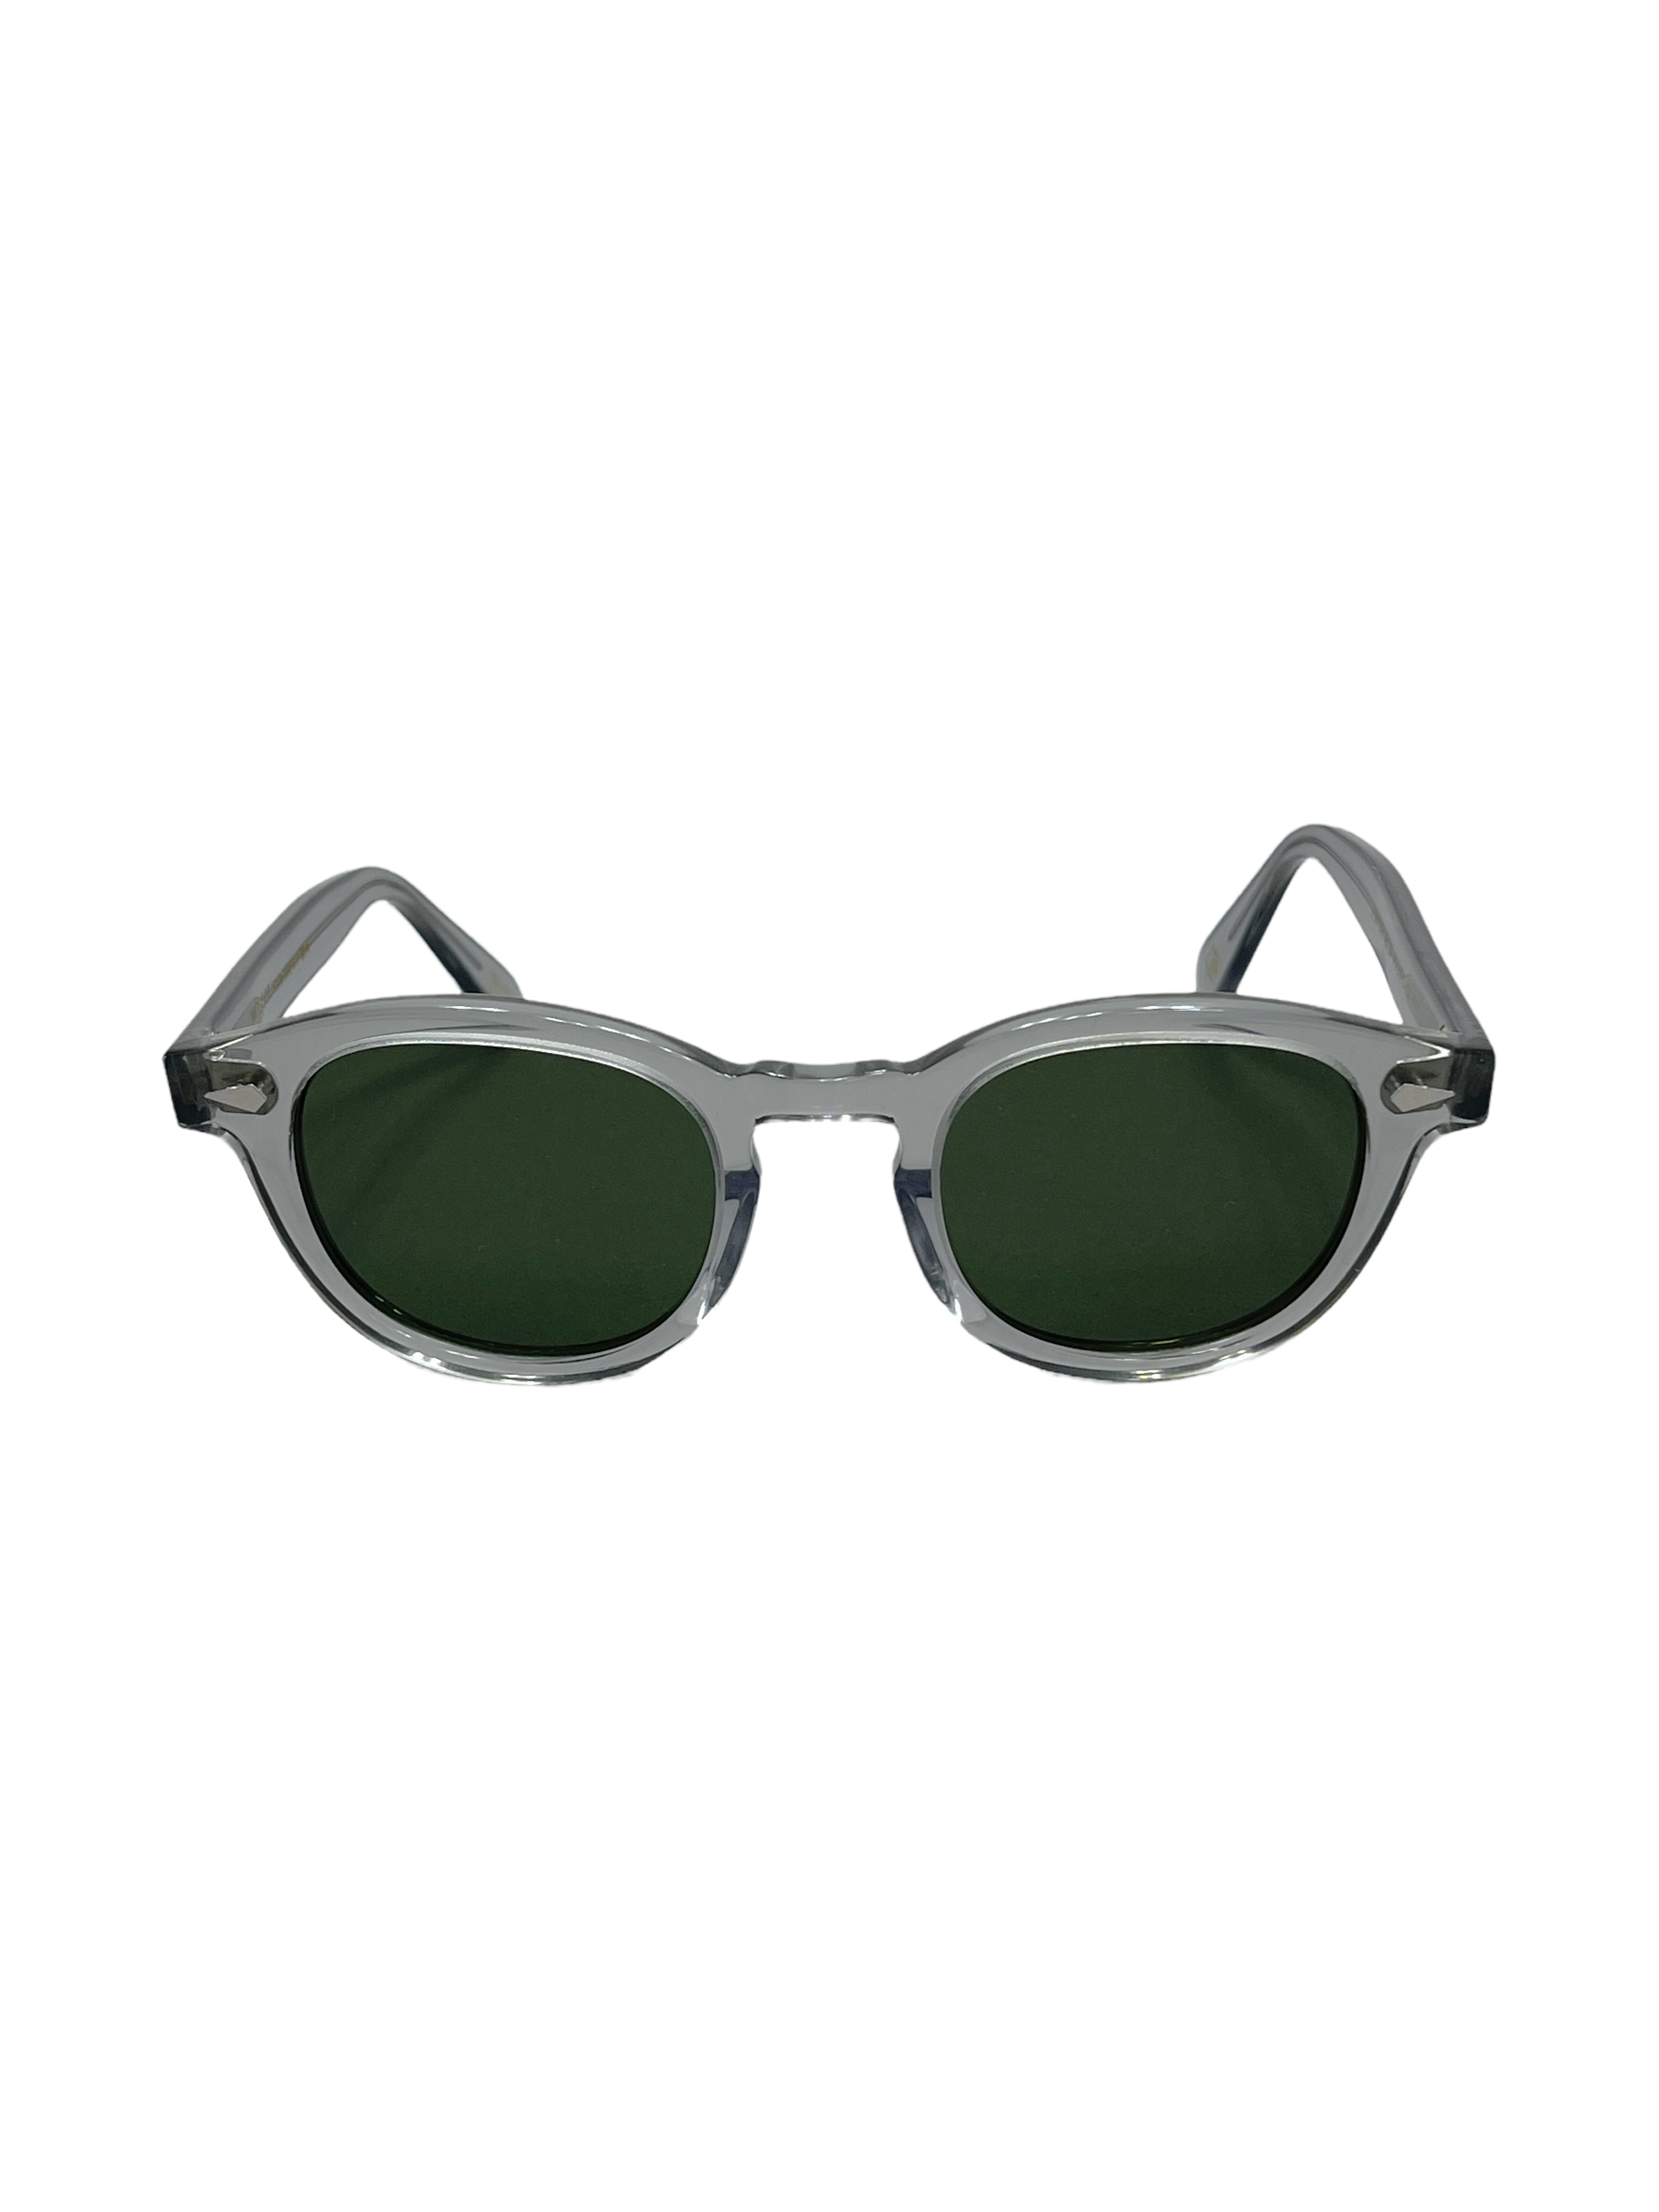 MOSCOT Lemtosh Light Grey Frame & Green Lens Sunglasses 